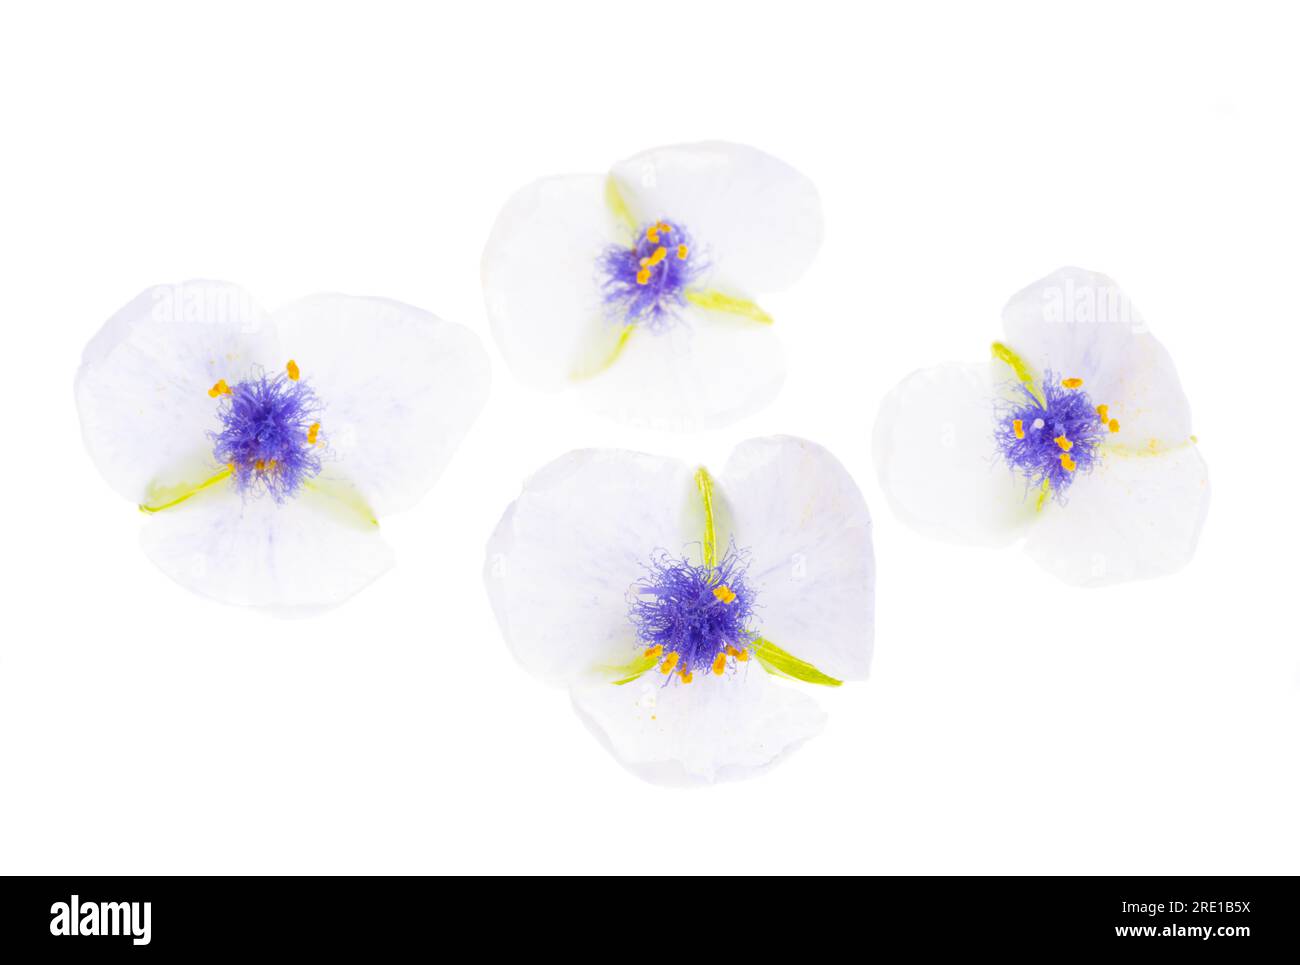 tradescantia flower isolated on white background Stock Photo